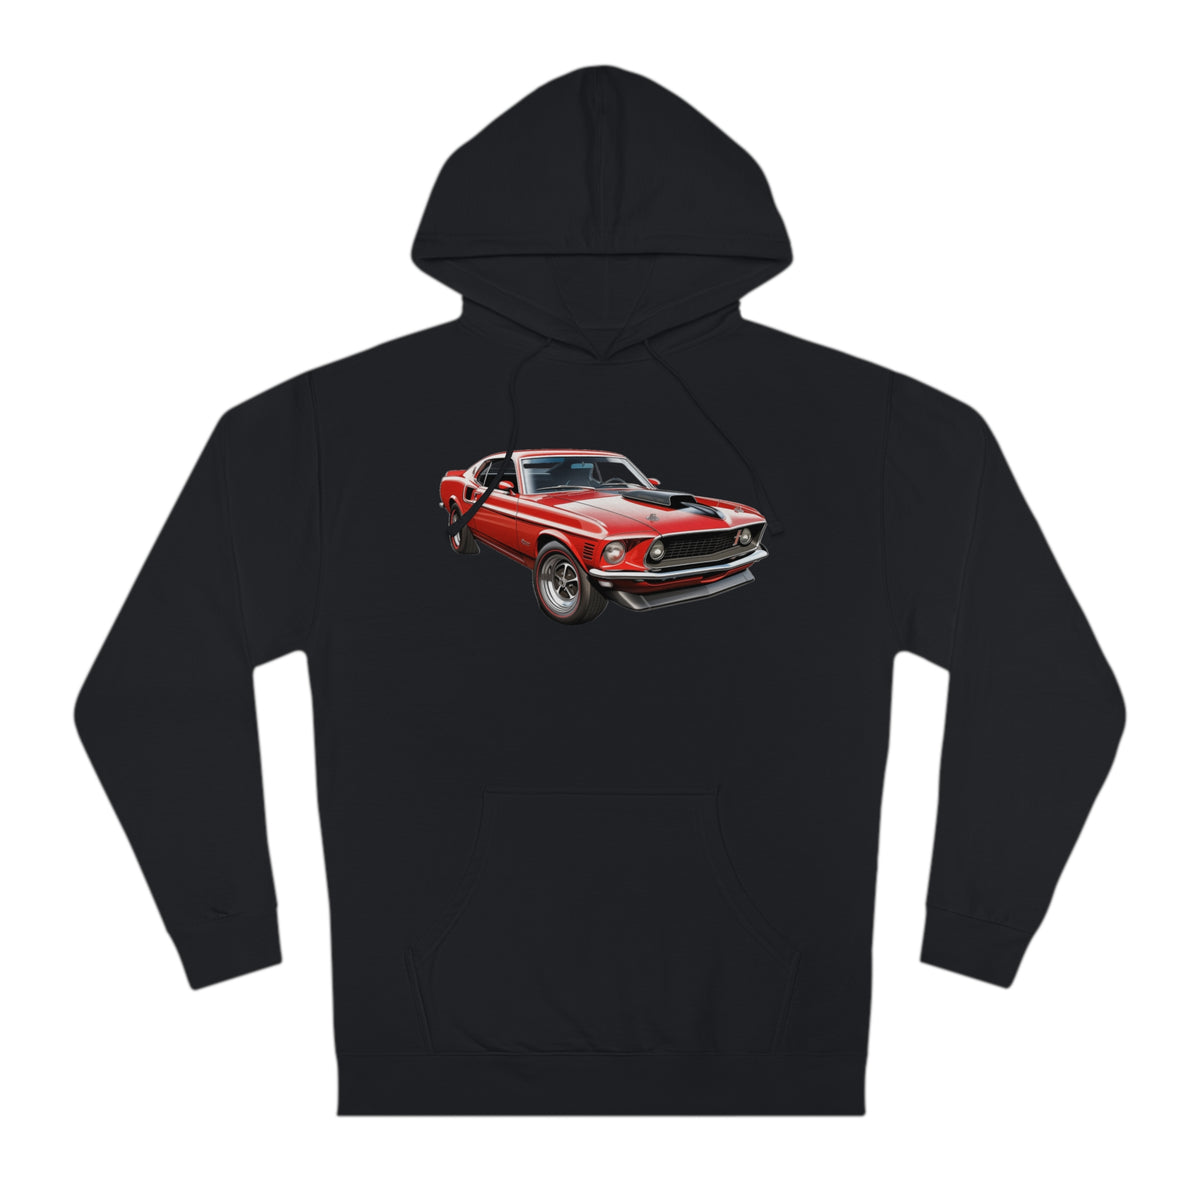 "Mach 1 Majesty" Classic Vintage Car Enthusiast Hoodie/Hooded Sweatshirt